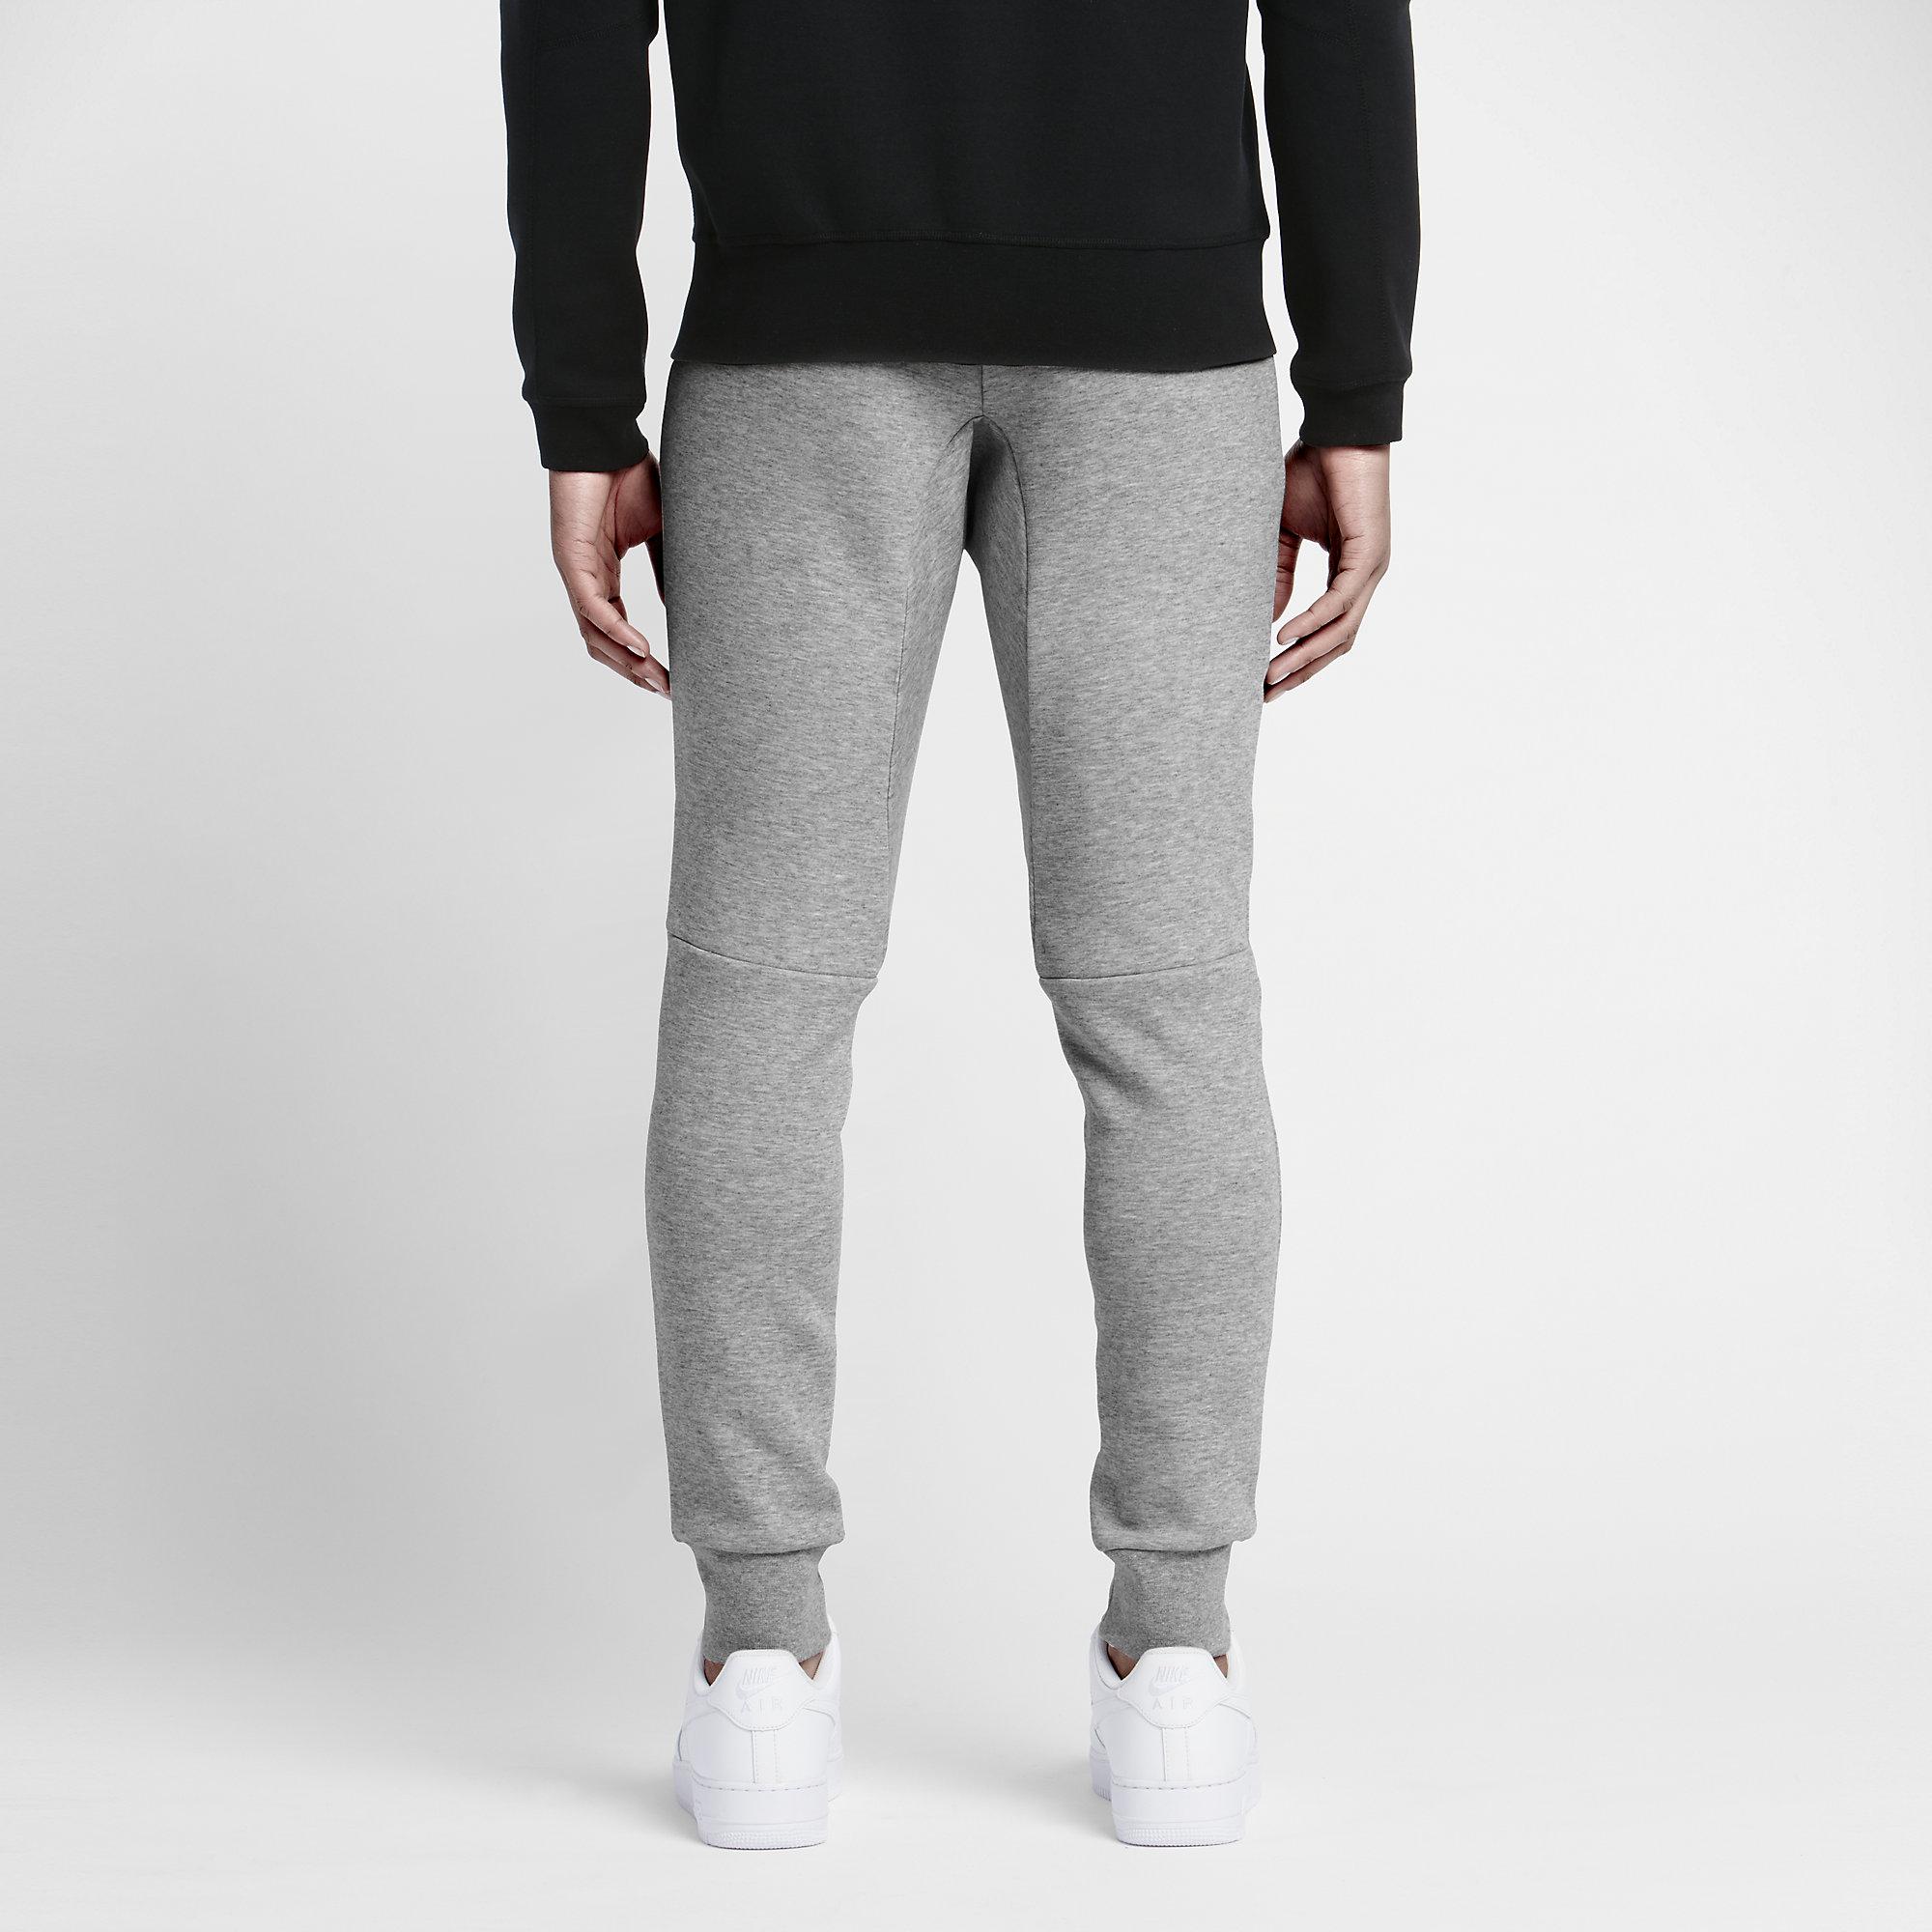 Nike Mens Tech Fleece Pants - Dark Grey Heather/Black - Tennisnuts.com